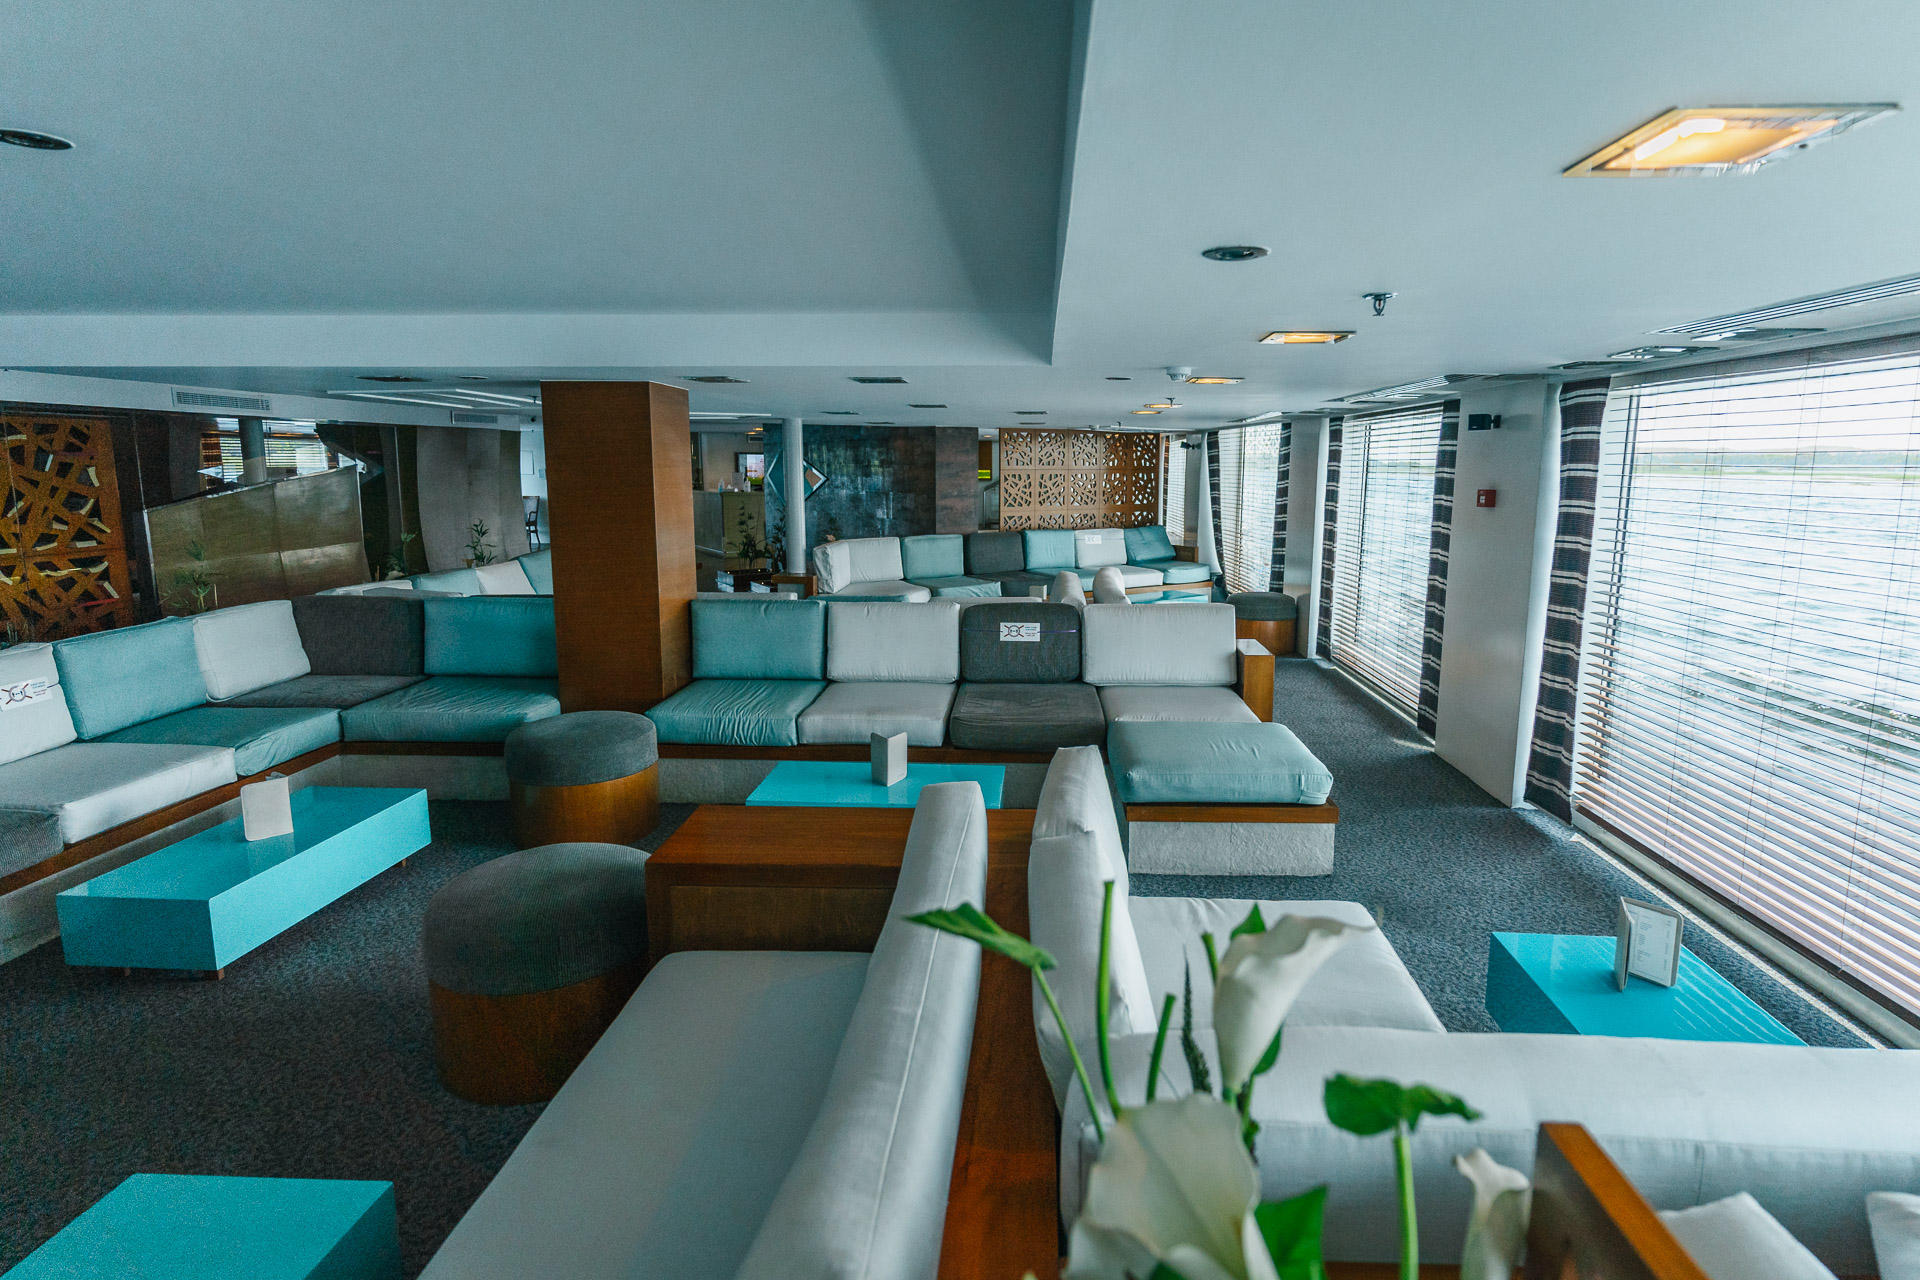 Le Fayan - Lounge and cocktail bar63- BLOGPOST HQ